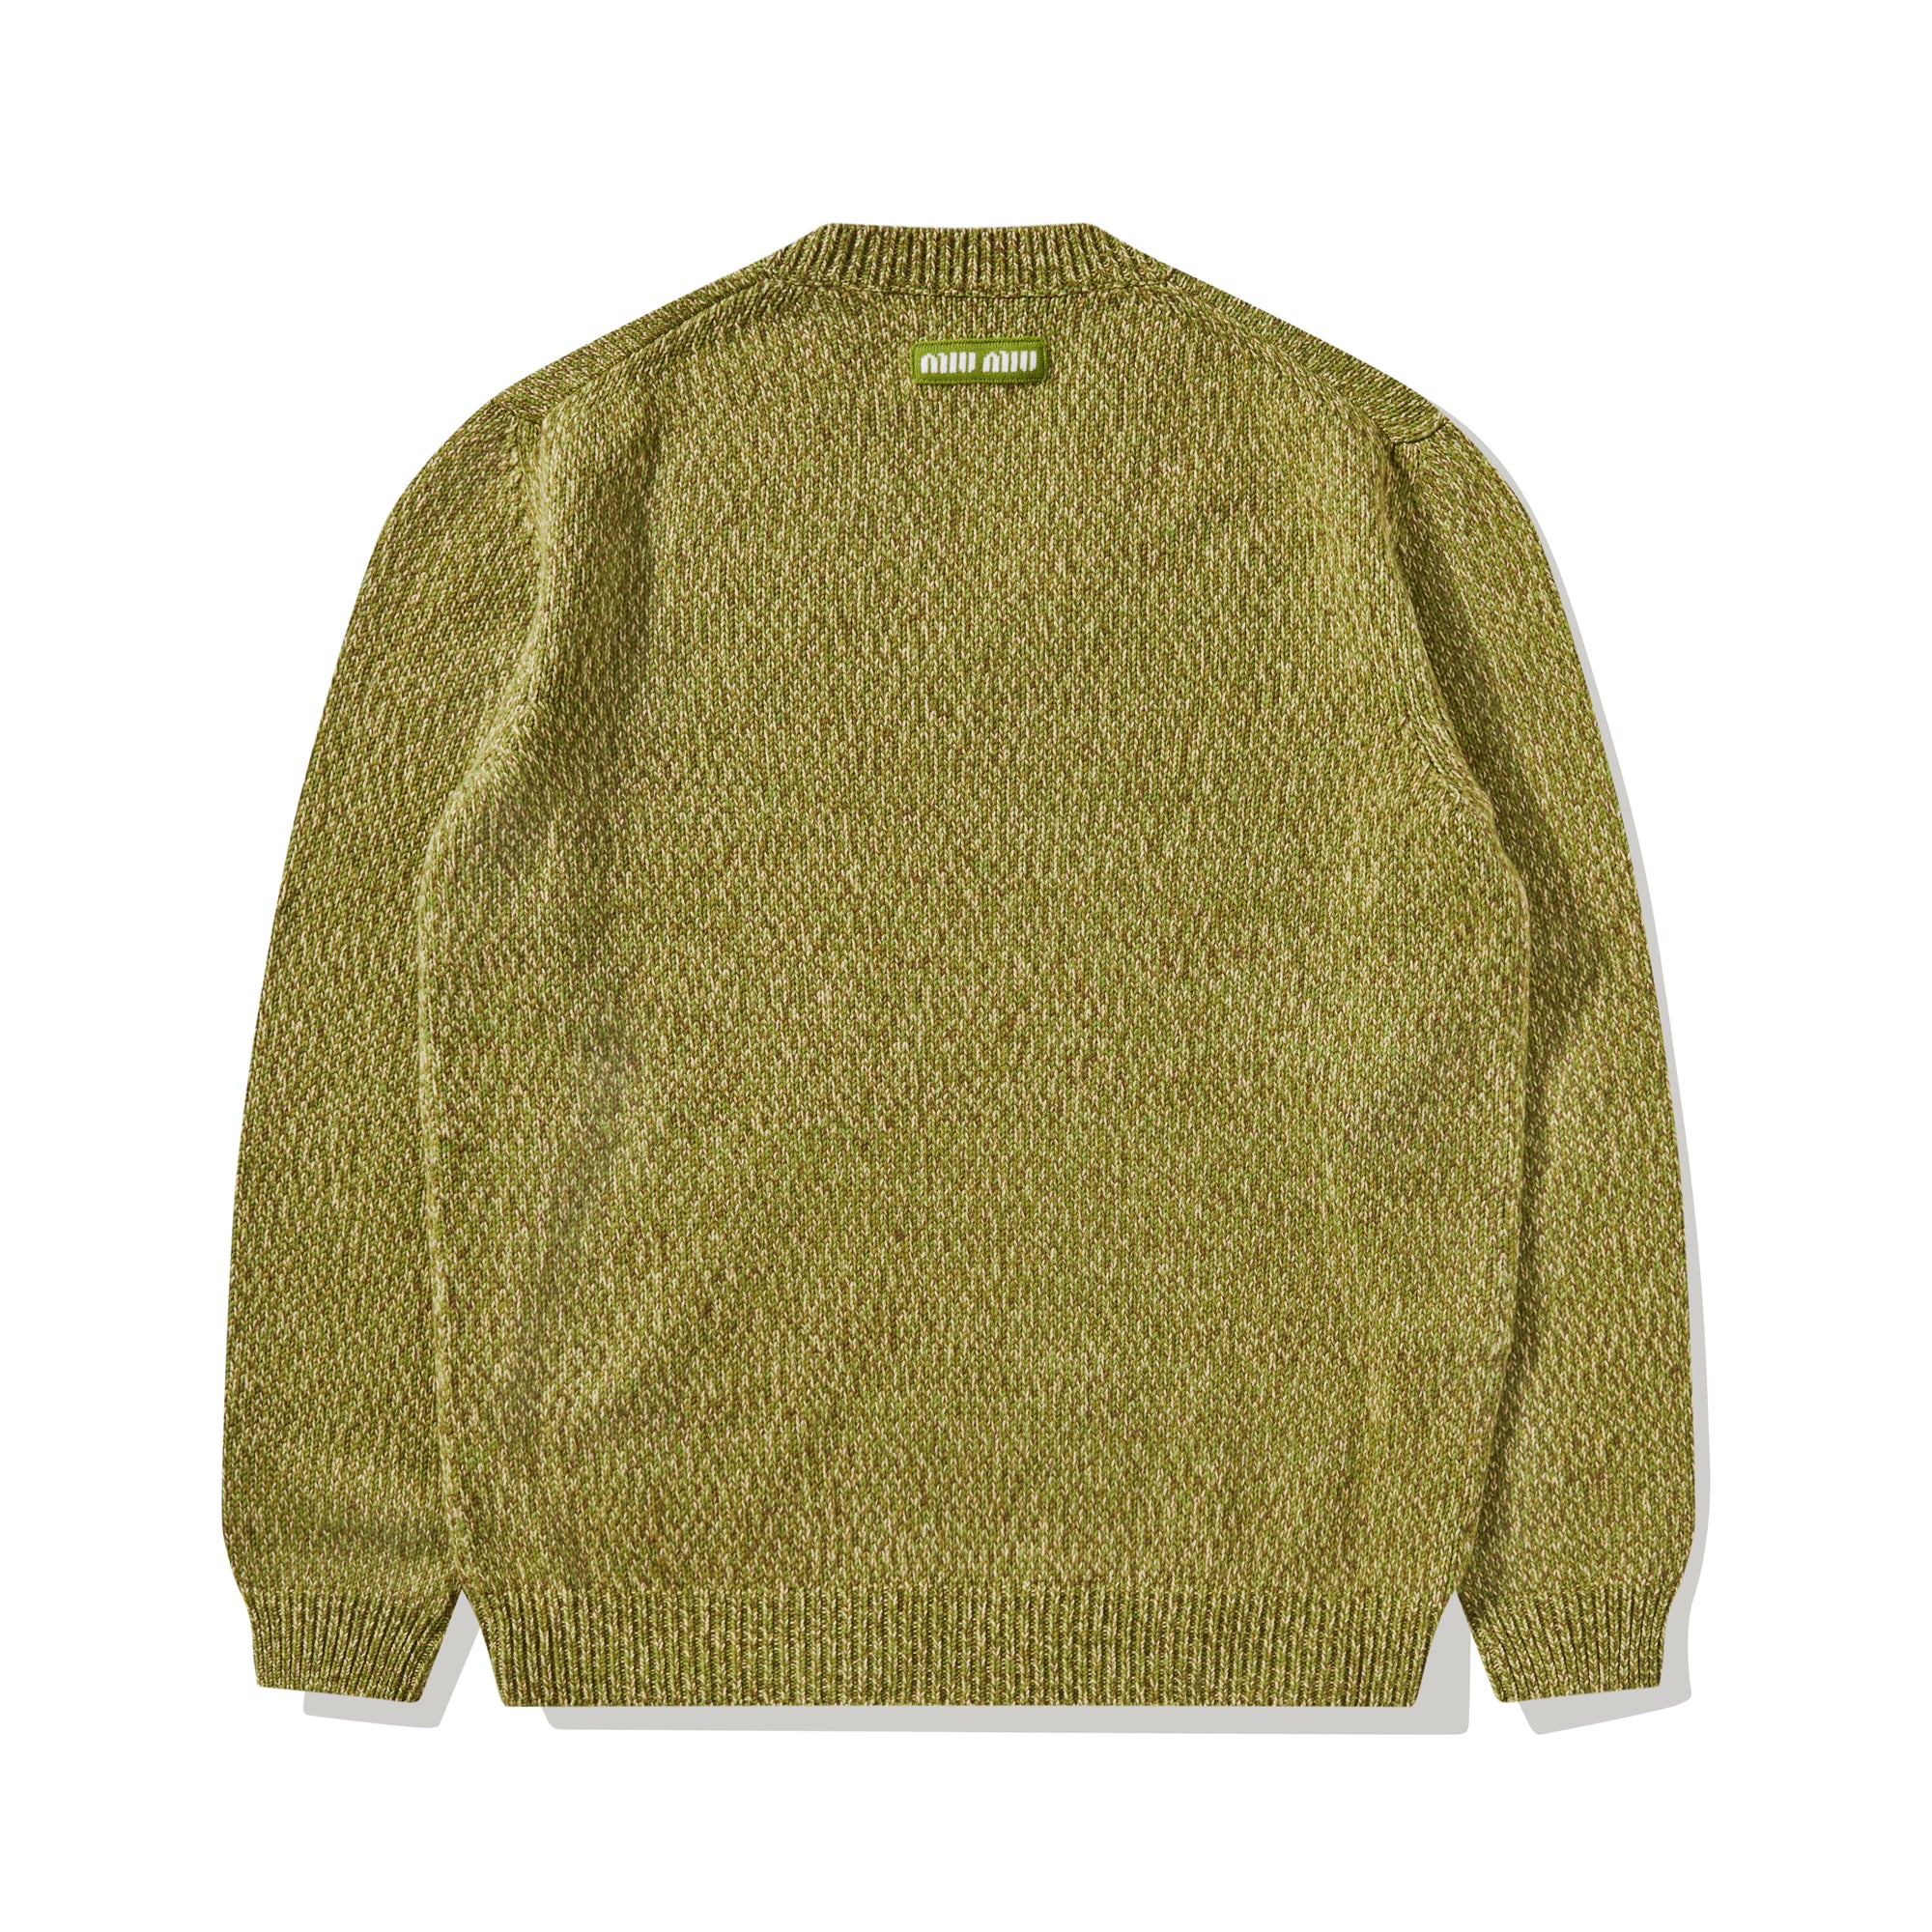 Miu Miu - Women's Wool And Cashmere Sweater - (Fern Green) view 2